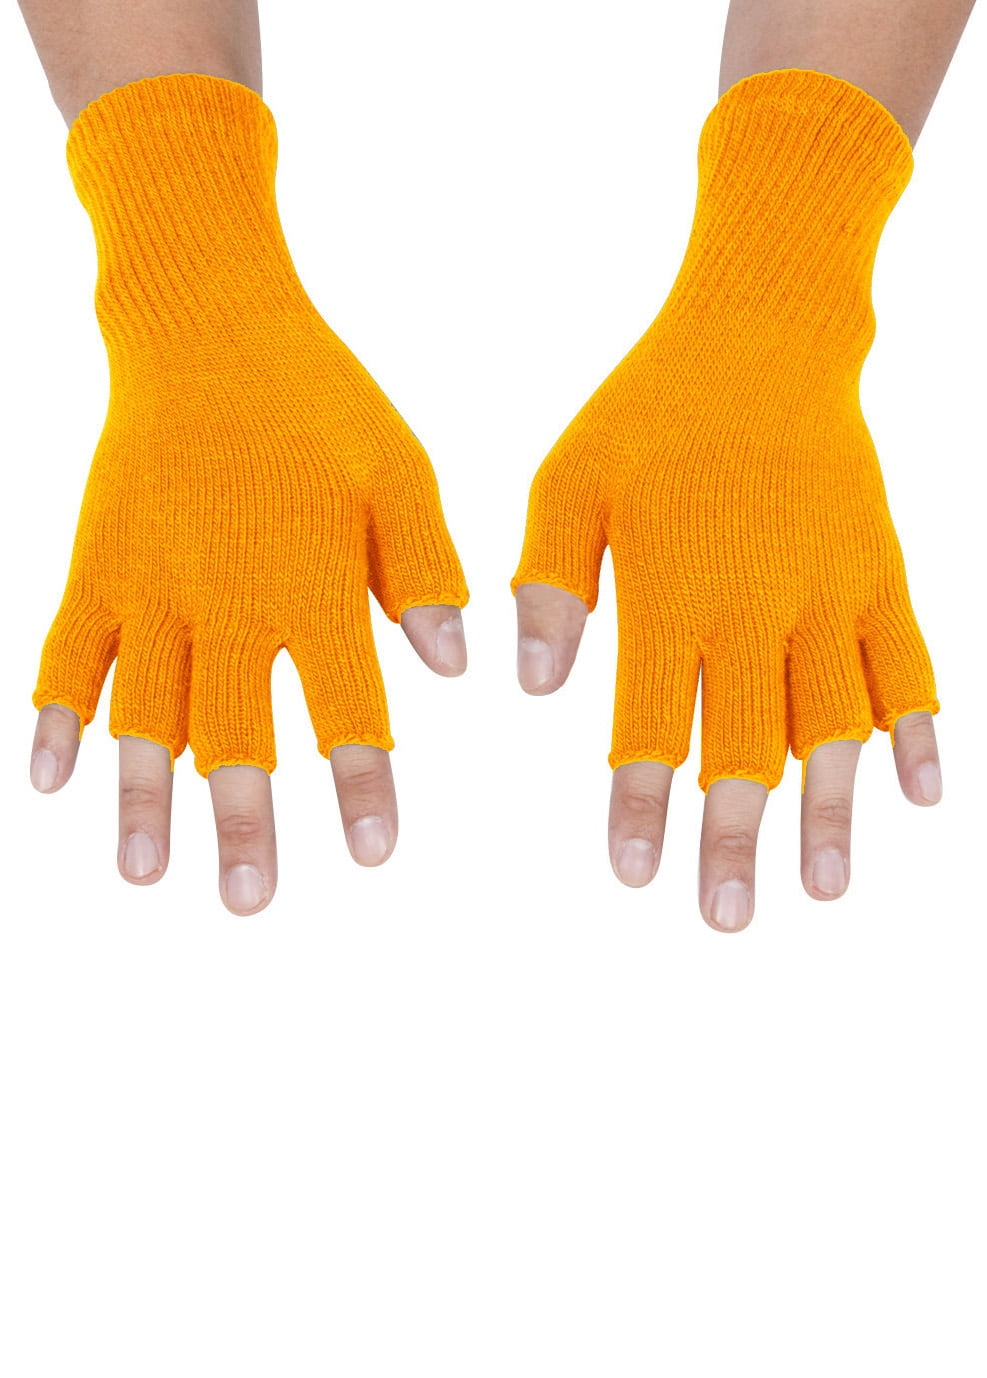 Blue Warm Gravity Gloves, Fingerless Knit Navy Stretchy Threads Half Unisex Finger